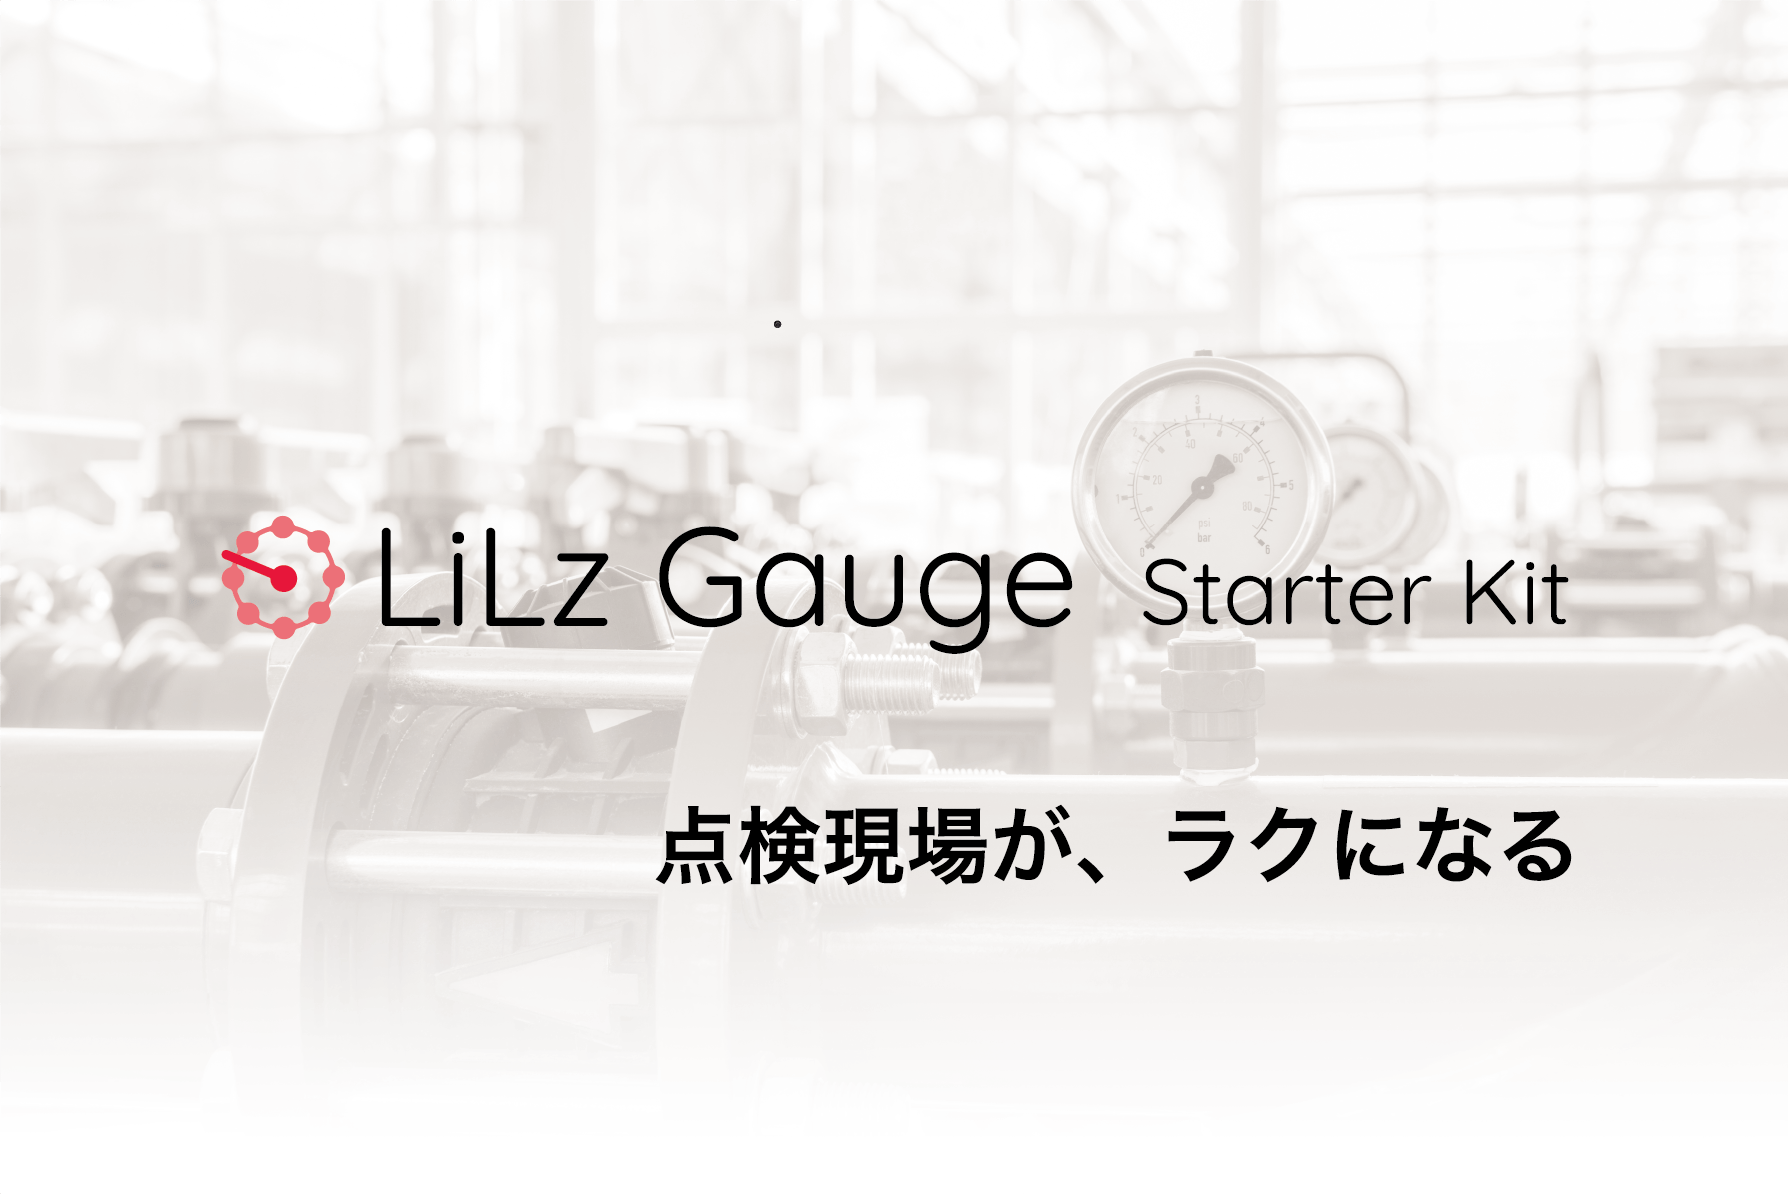 LiLz Gauge Starter Kit ver. 1 限定50台 提供開始のお知らせ